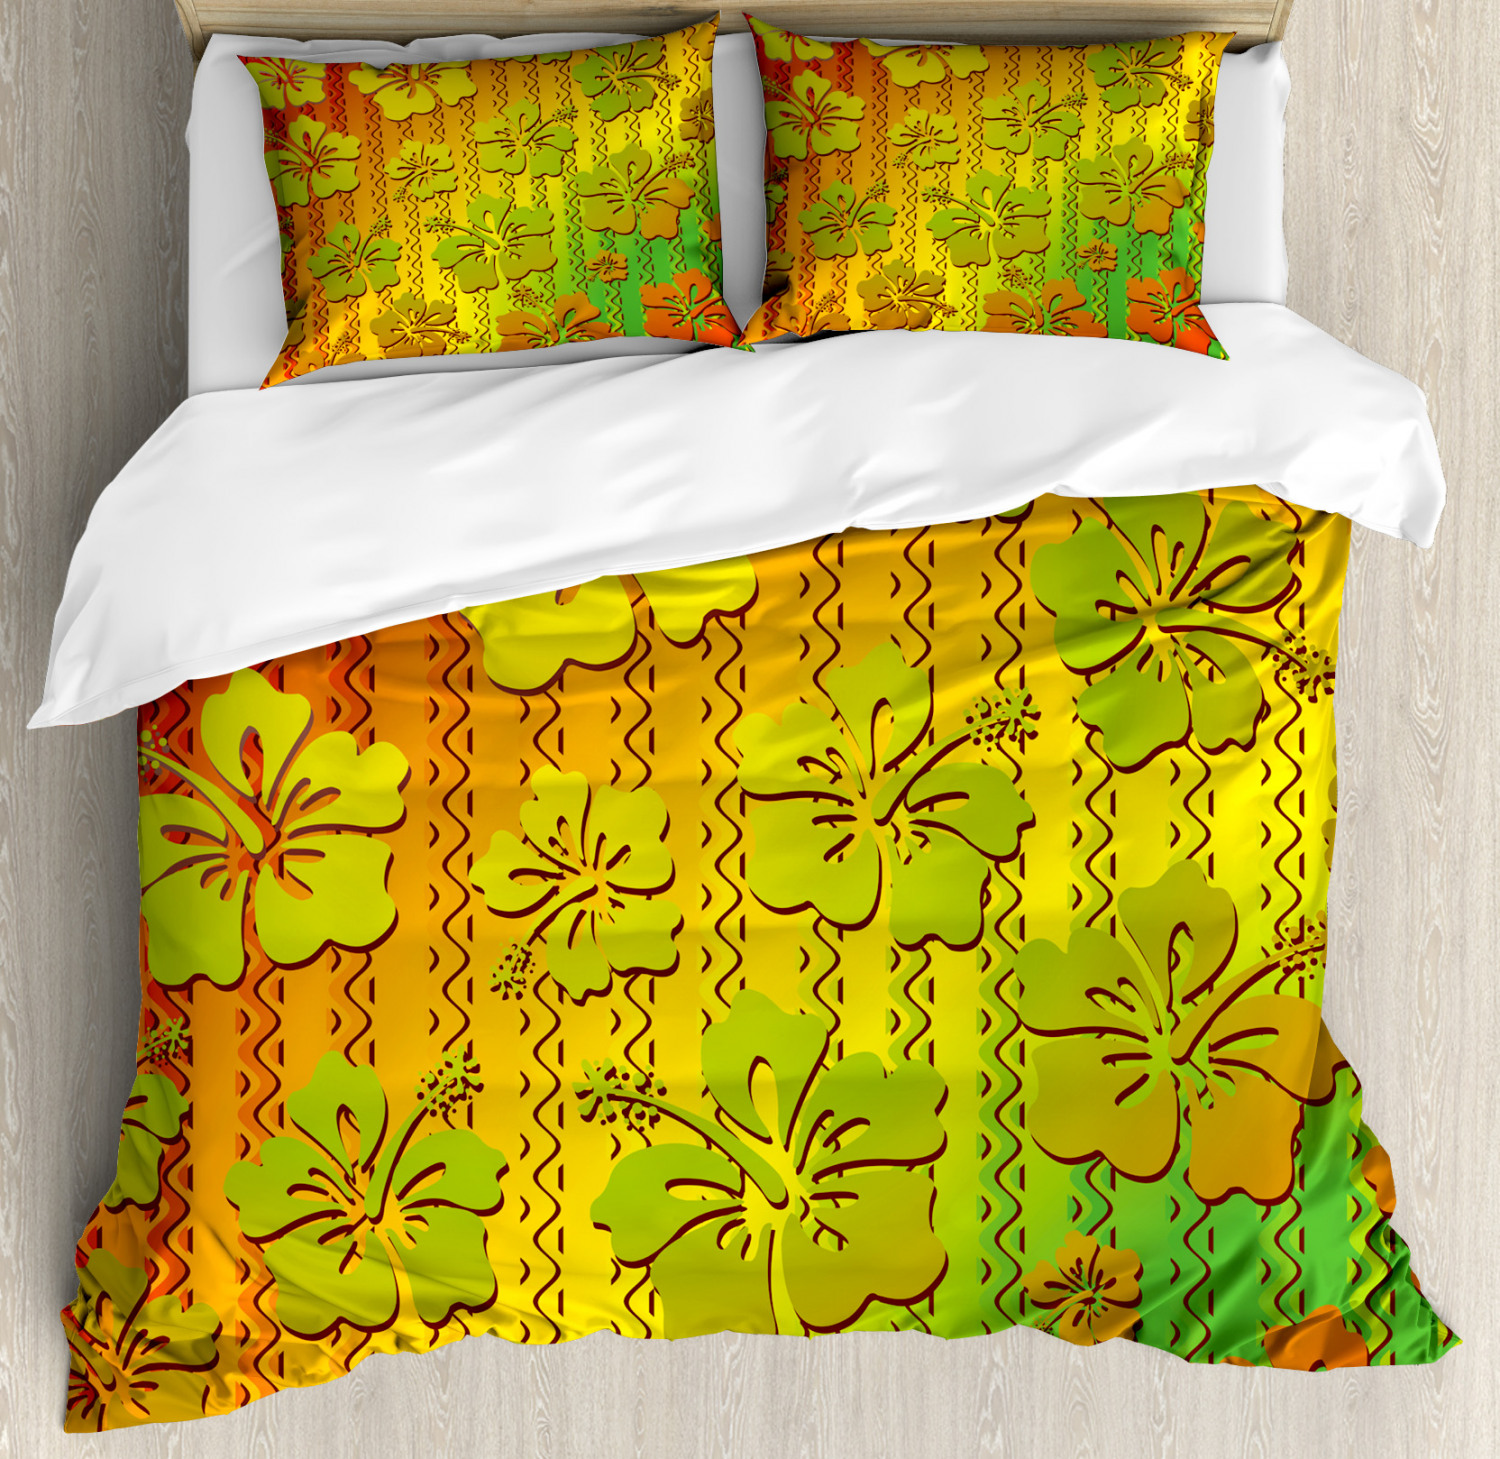 Rasta Duvet Cover Set With Pillow Shams Jamaican Island Flower